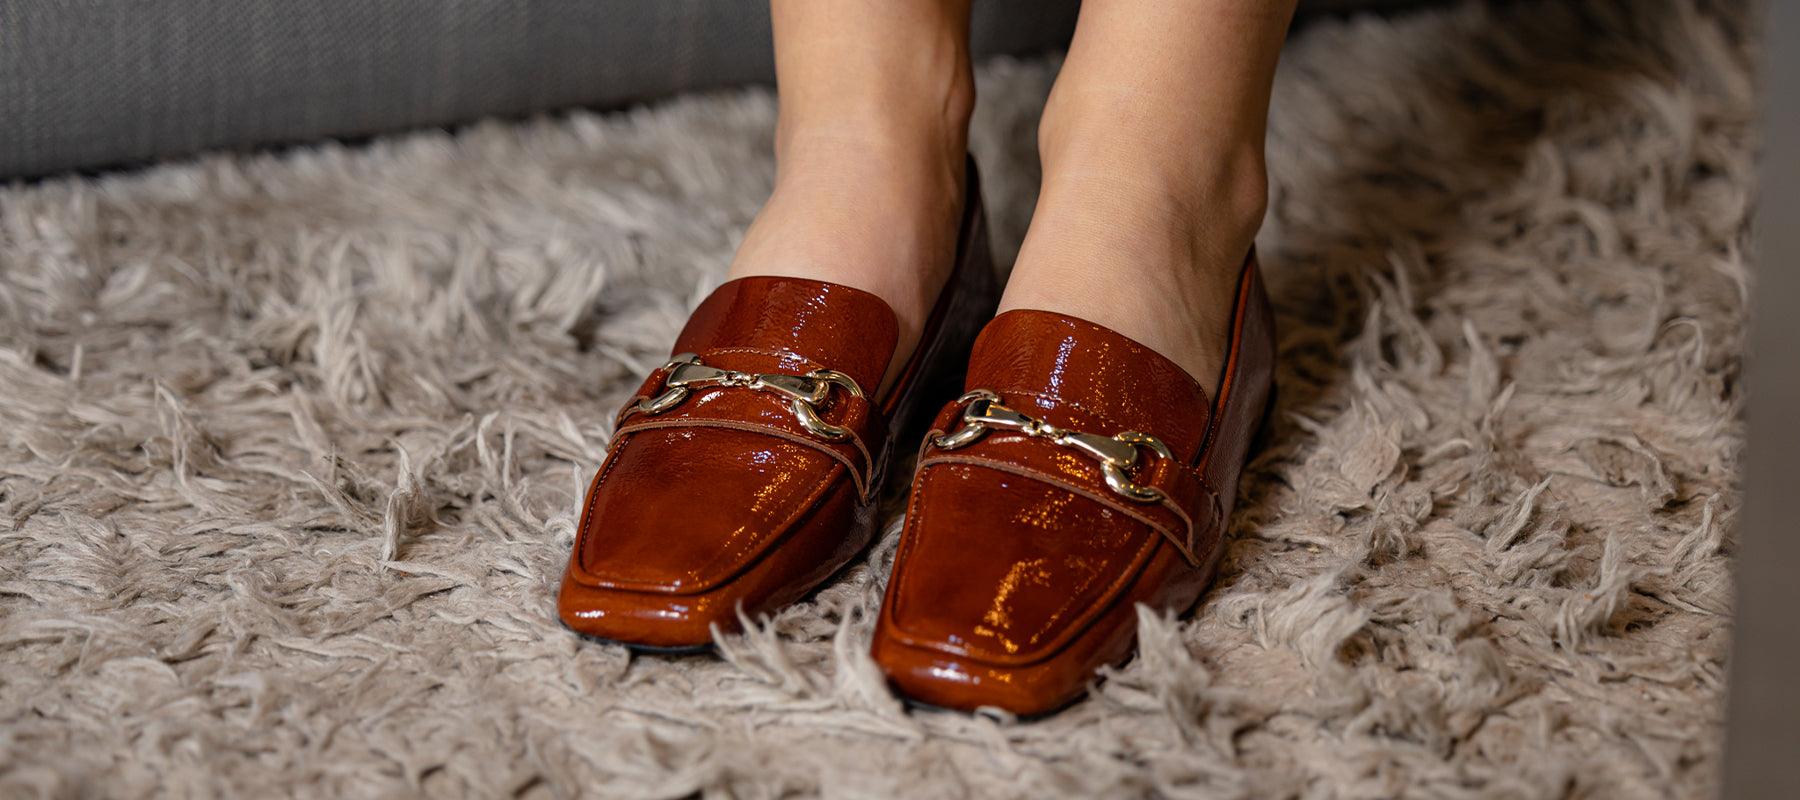 Lees nu Shoes blog: Lakleren Loafers een musthave